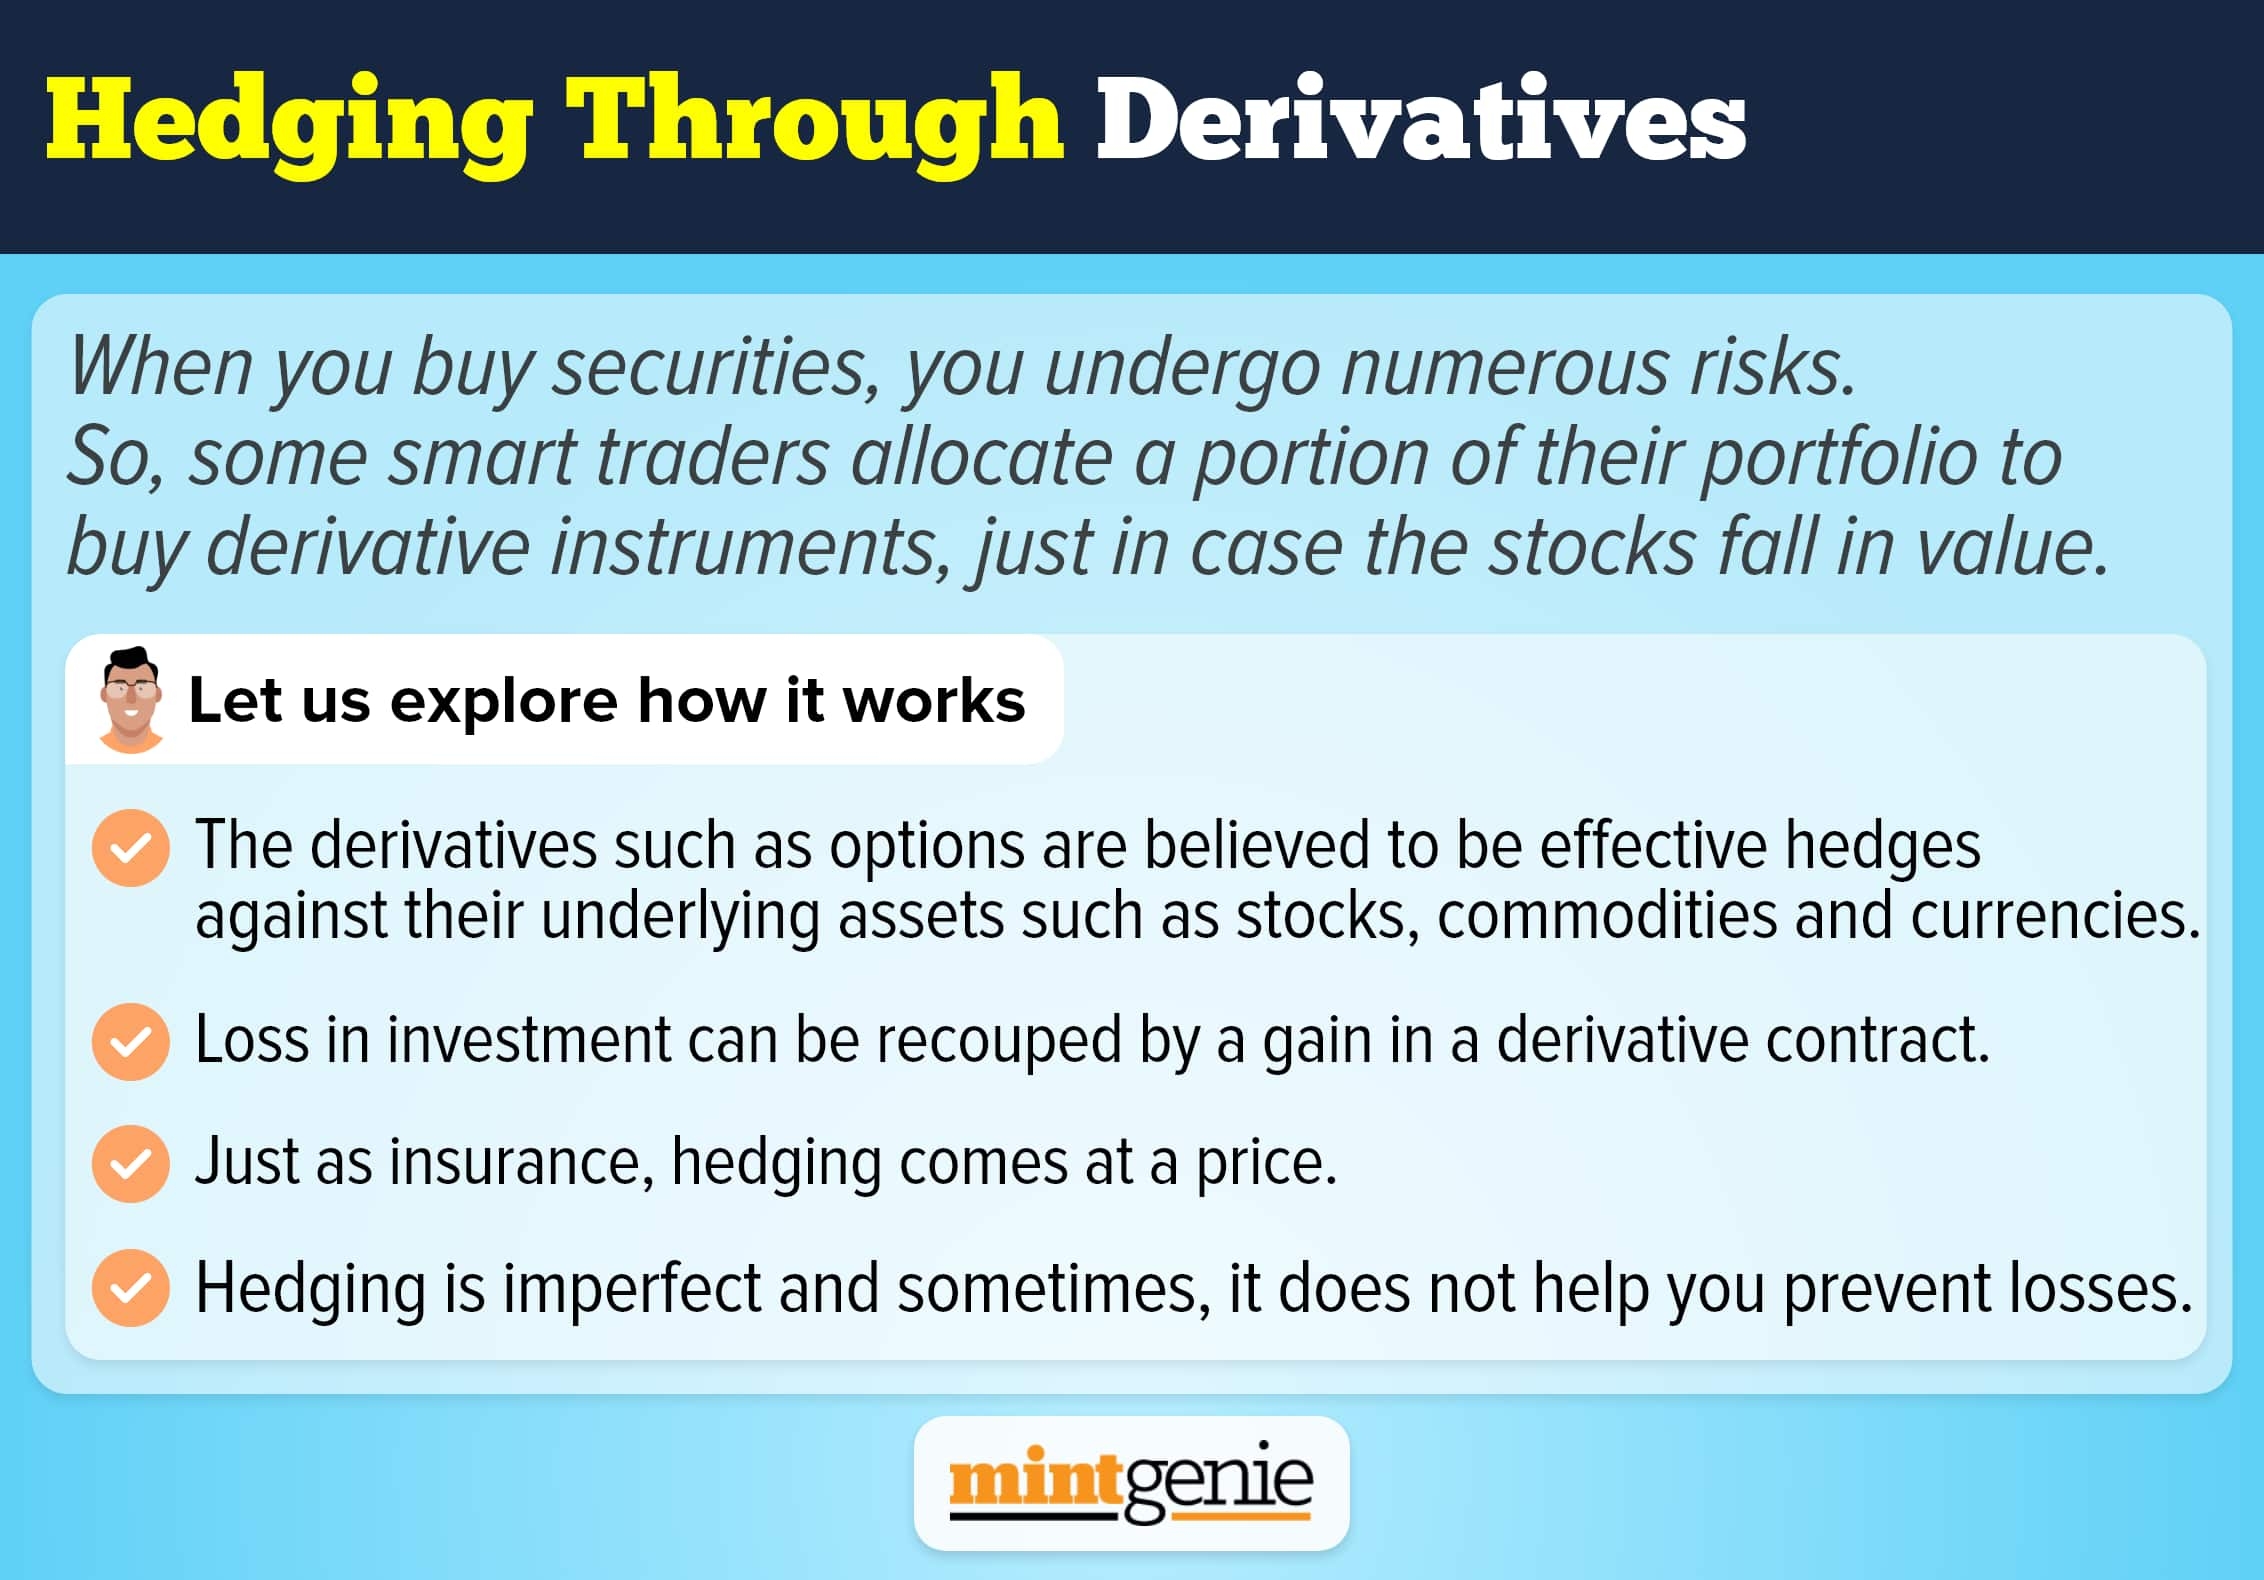 We explain hedging through derivatives here.&nbsp;